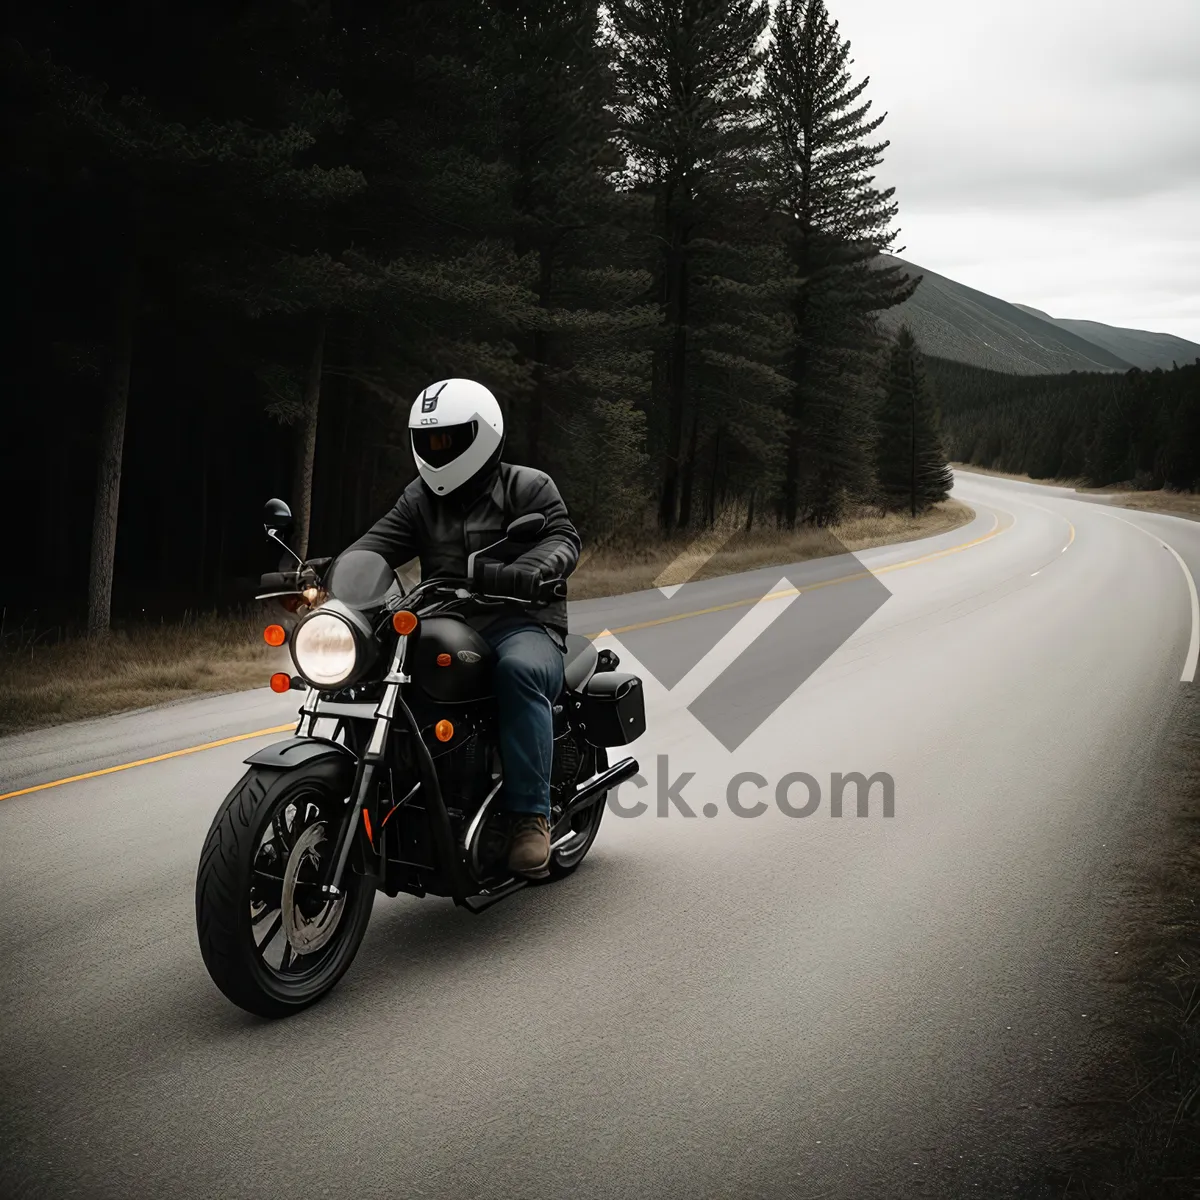 Picture of Thrilling Race on Mountain Terrain: Motorbike Speeding Through